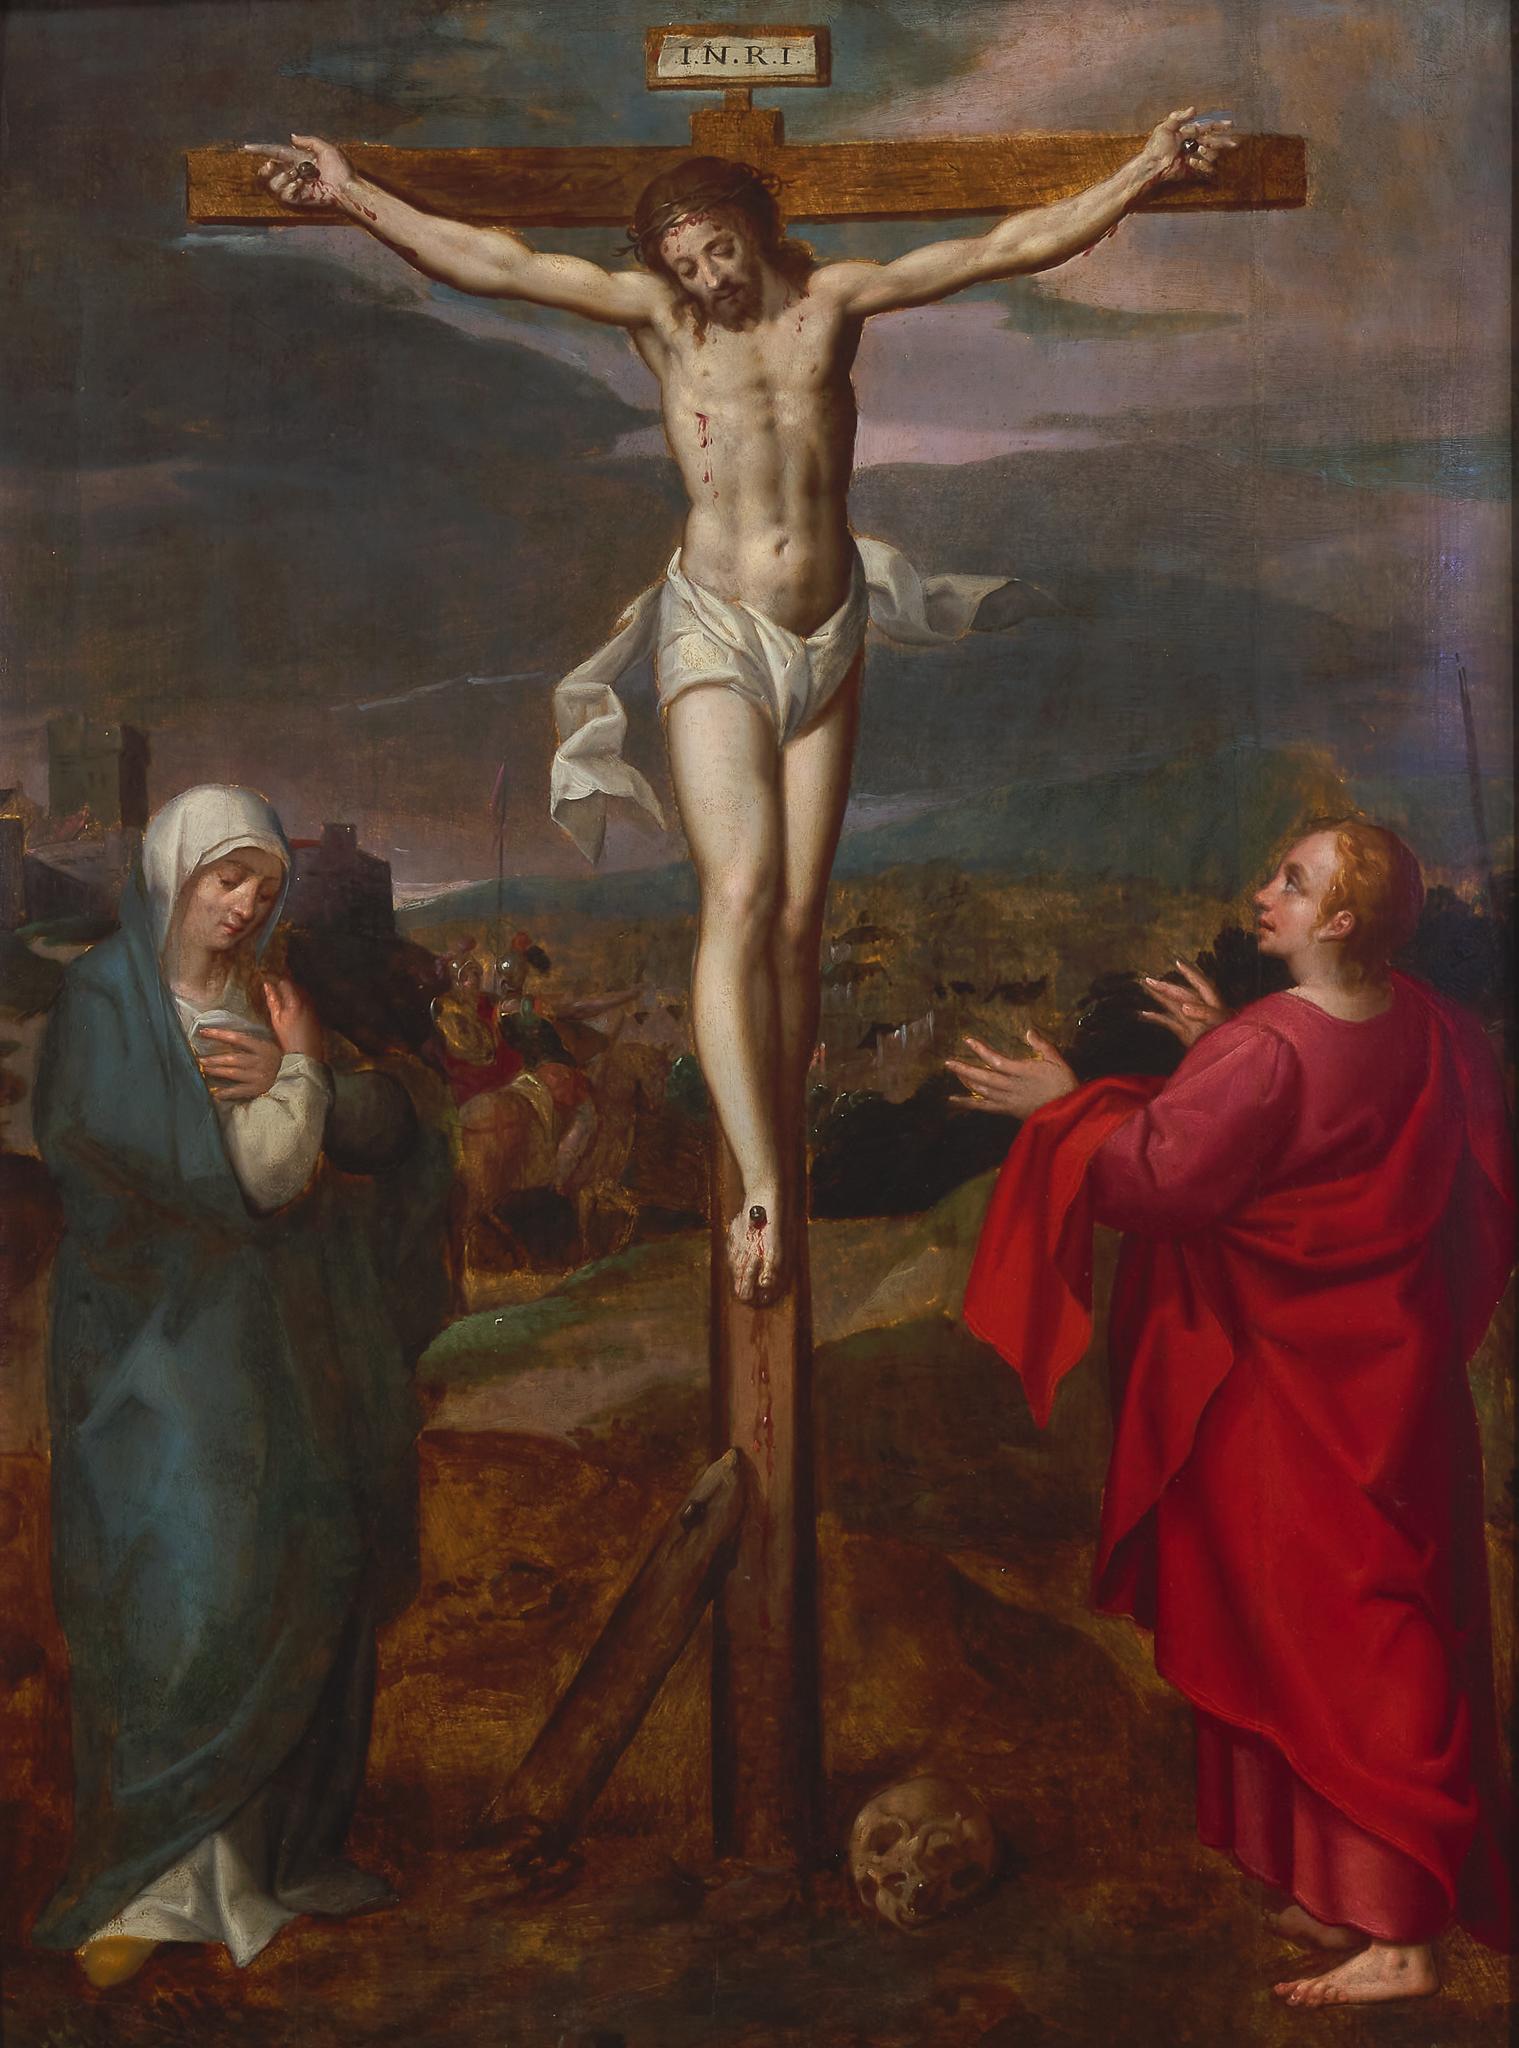 Frans Pourbus the Elder Figurative Painting - 16th century crucifixion scene - Flemish old master - Antwerp, Bruges